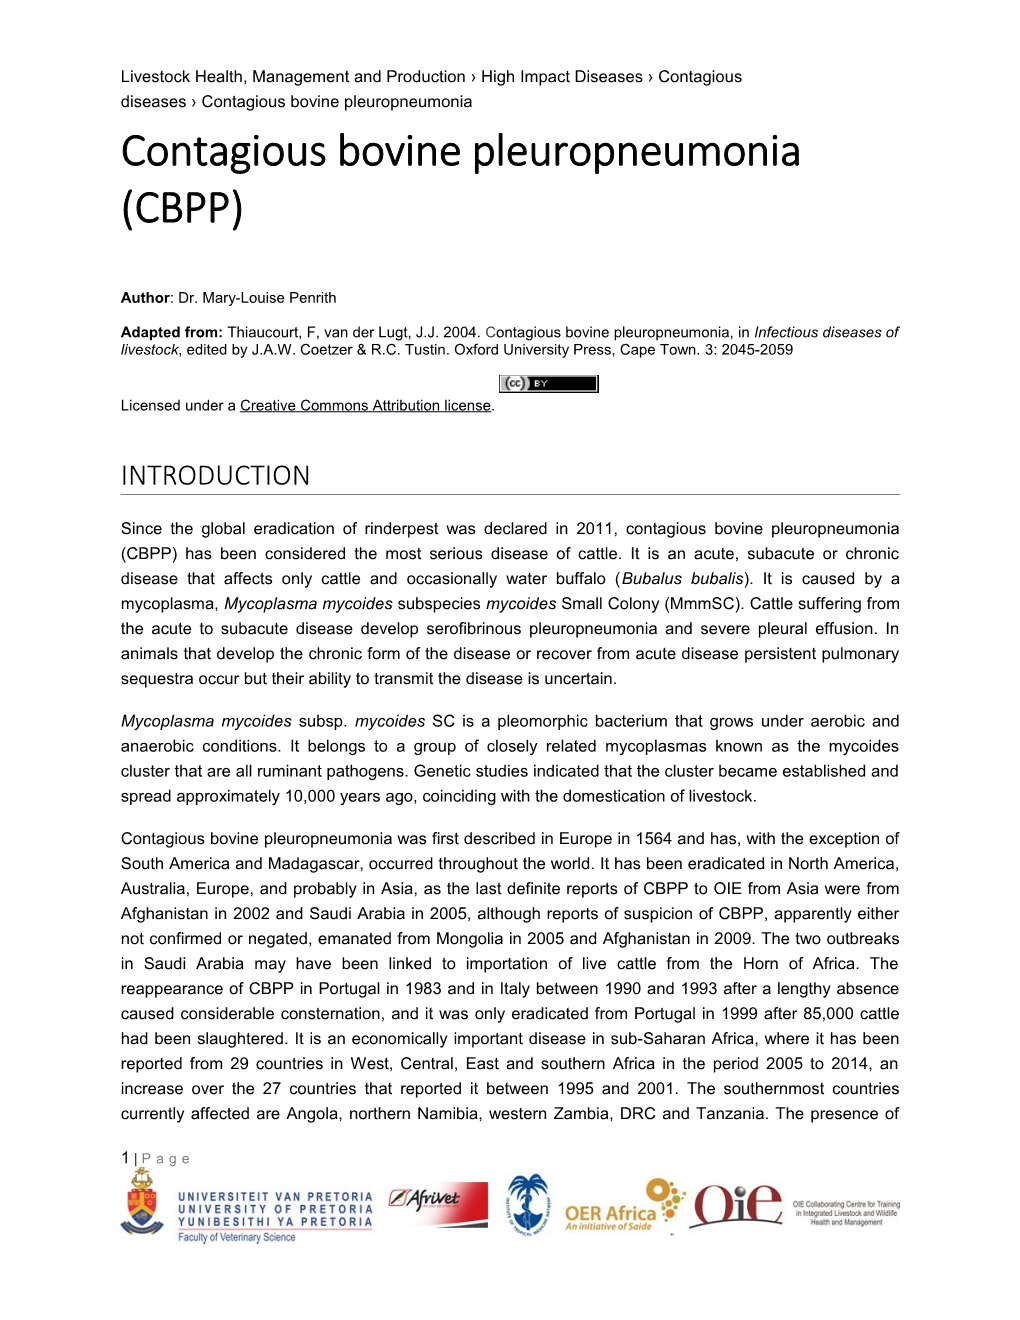 Contagious Bovine Pleuropneumonia (CBPP)